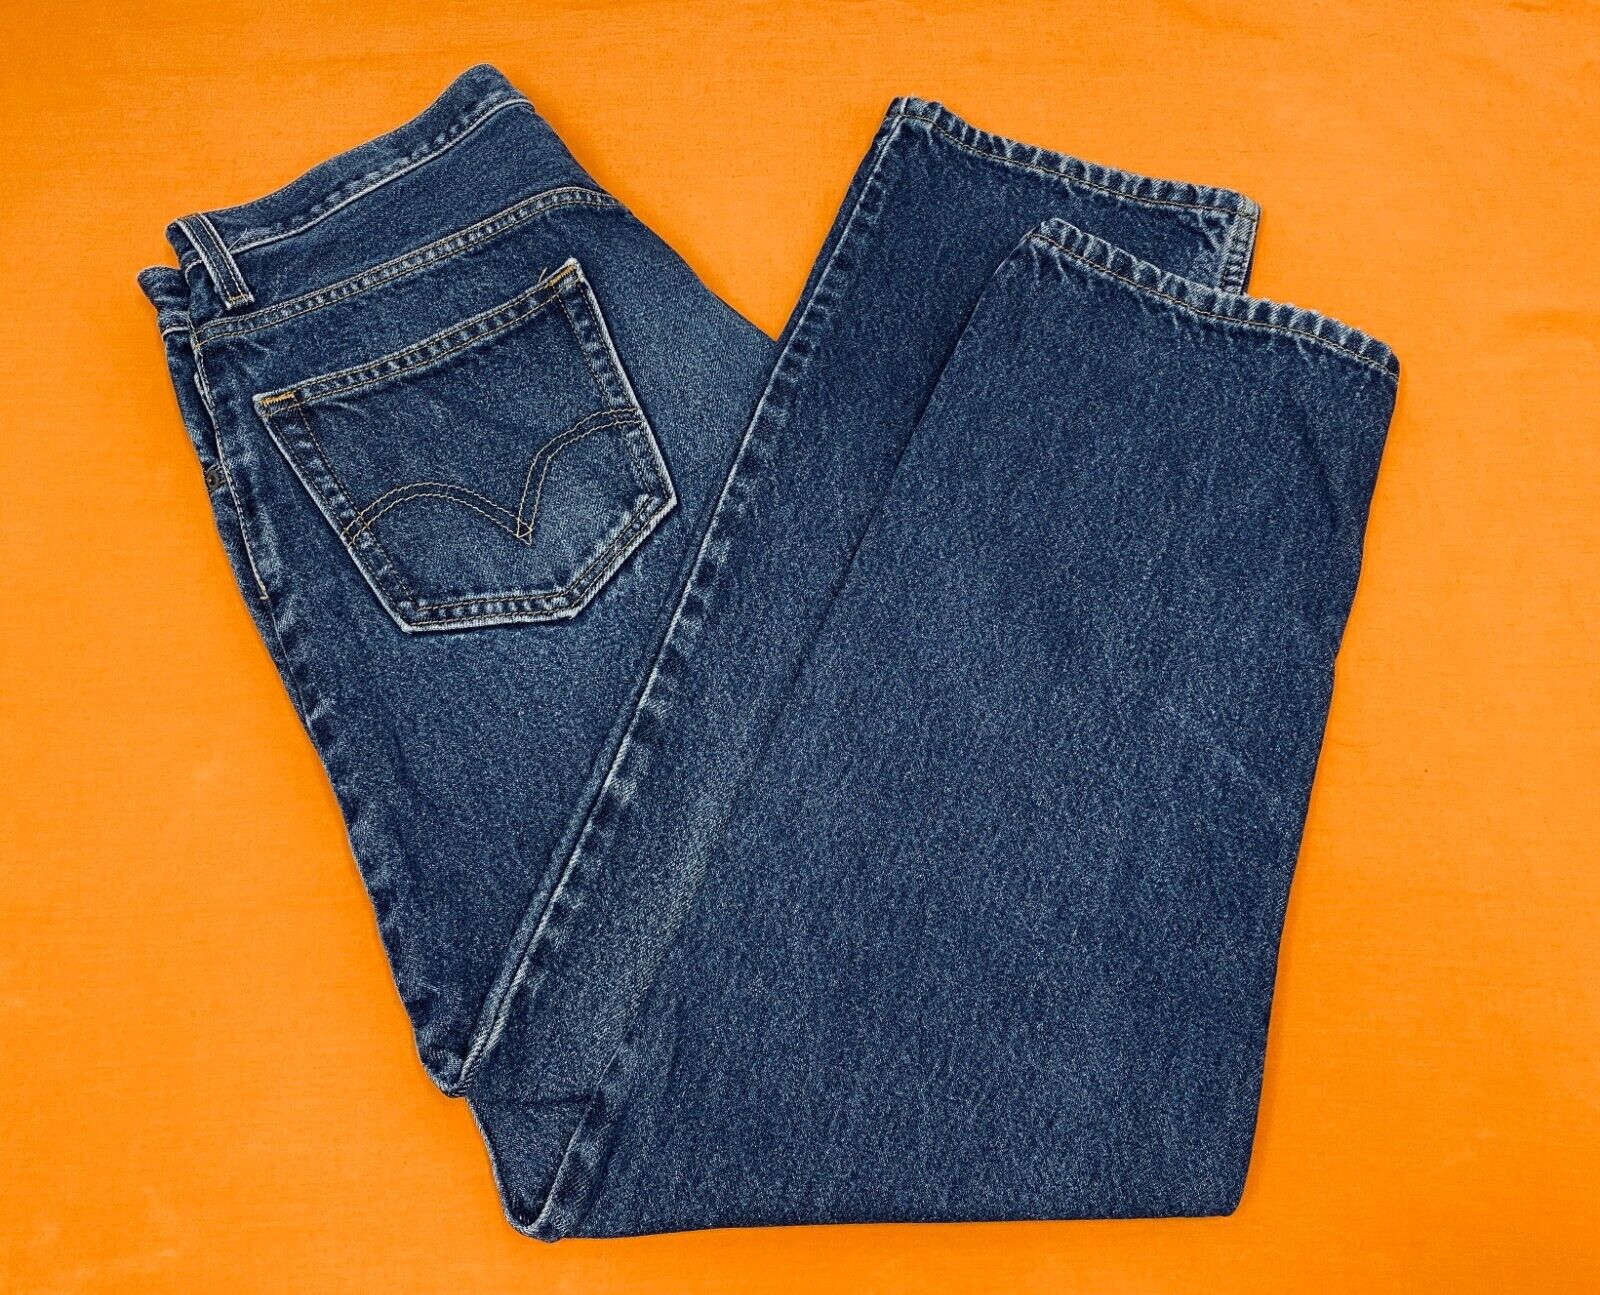 Levi Strauss 505 Blue Jeans Size 34x30 - image 3